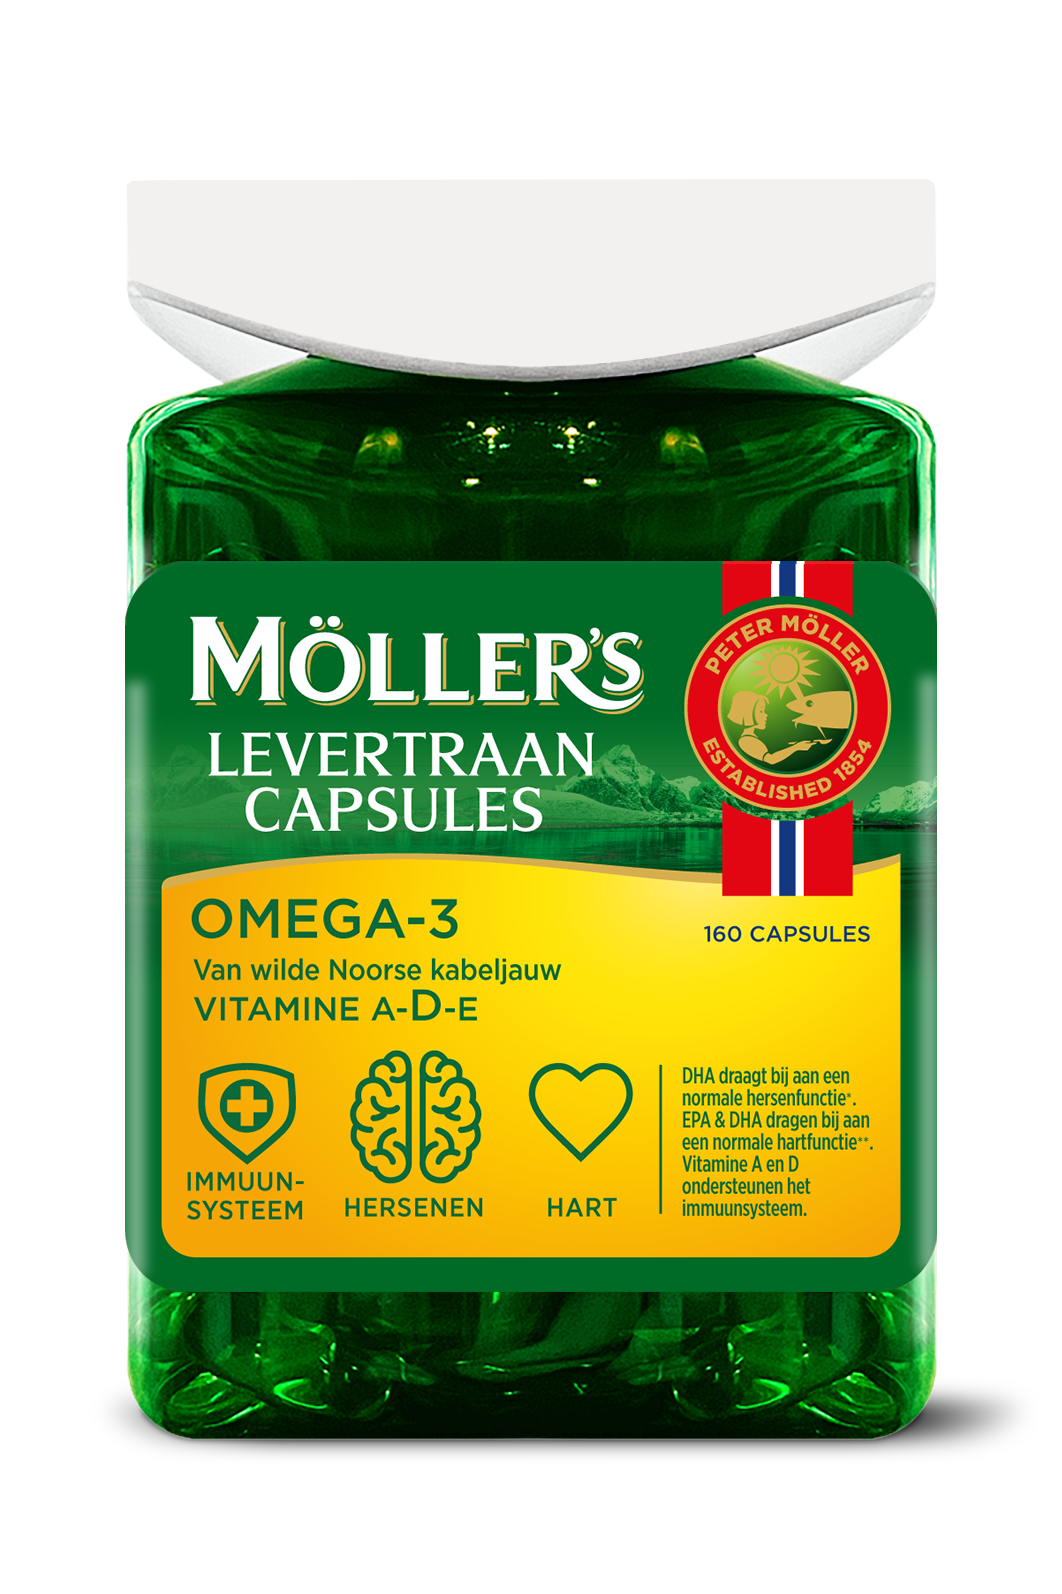 Möller's Omega-3 Levertraancapsules